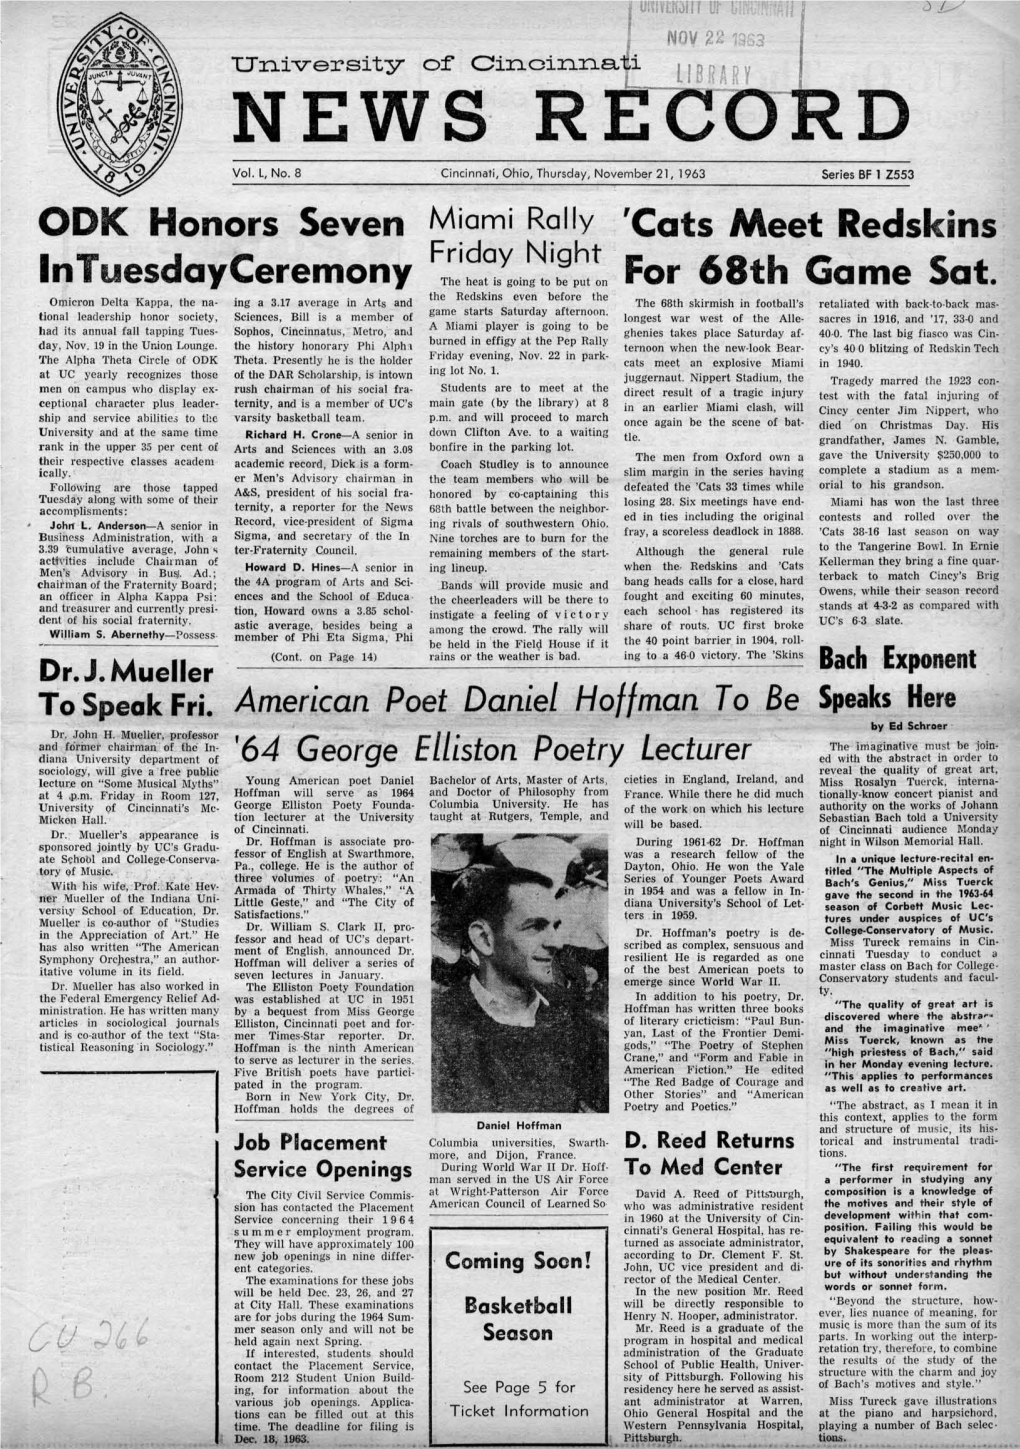 University of Cincinnati News Record. Thursday, November 21, 1963. Vol. L, No. 8